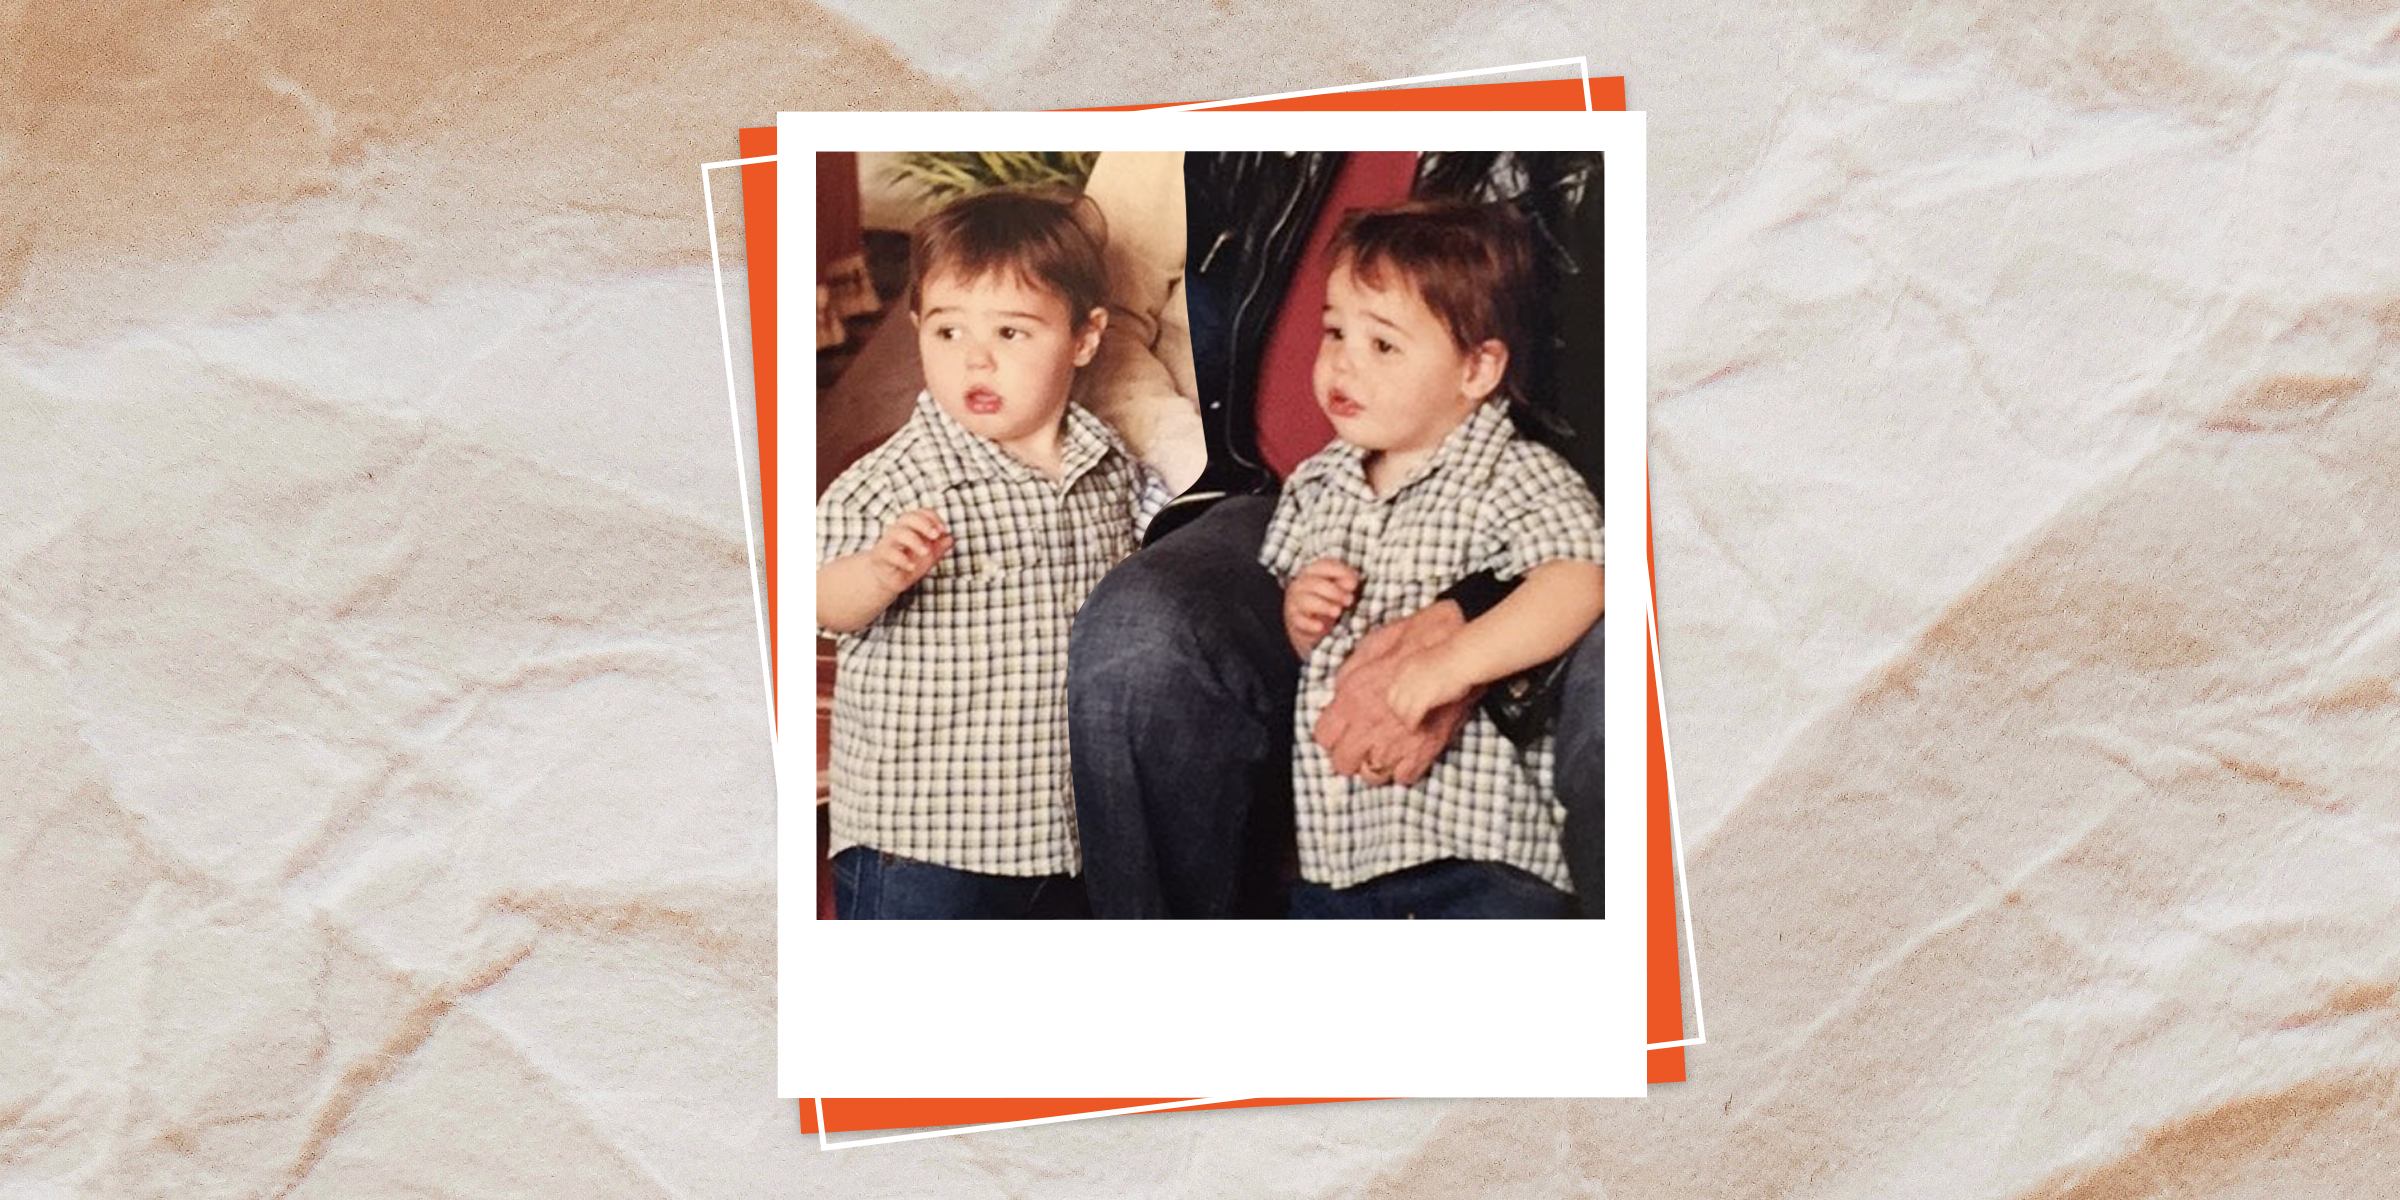 Die Zwillingsjungs des berühmten Stars, 2017 | Quelle: Instagram.com/wandamillerrogers